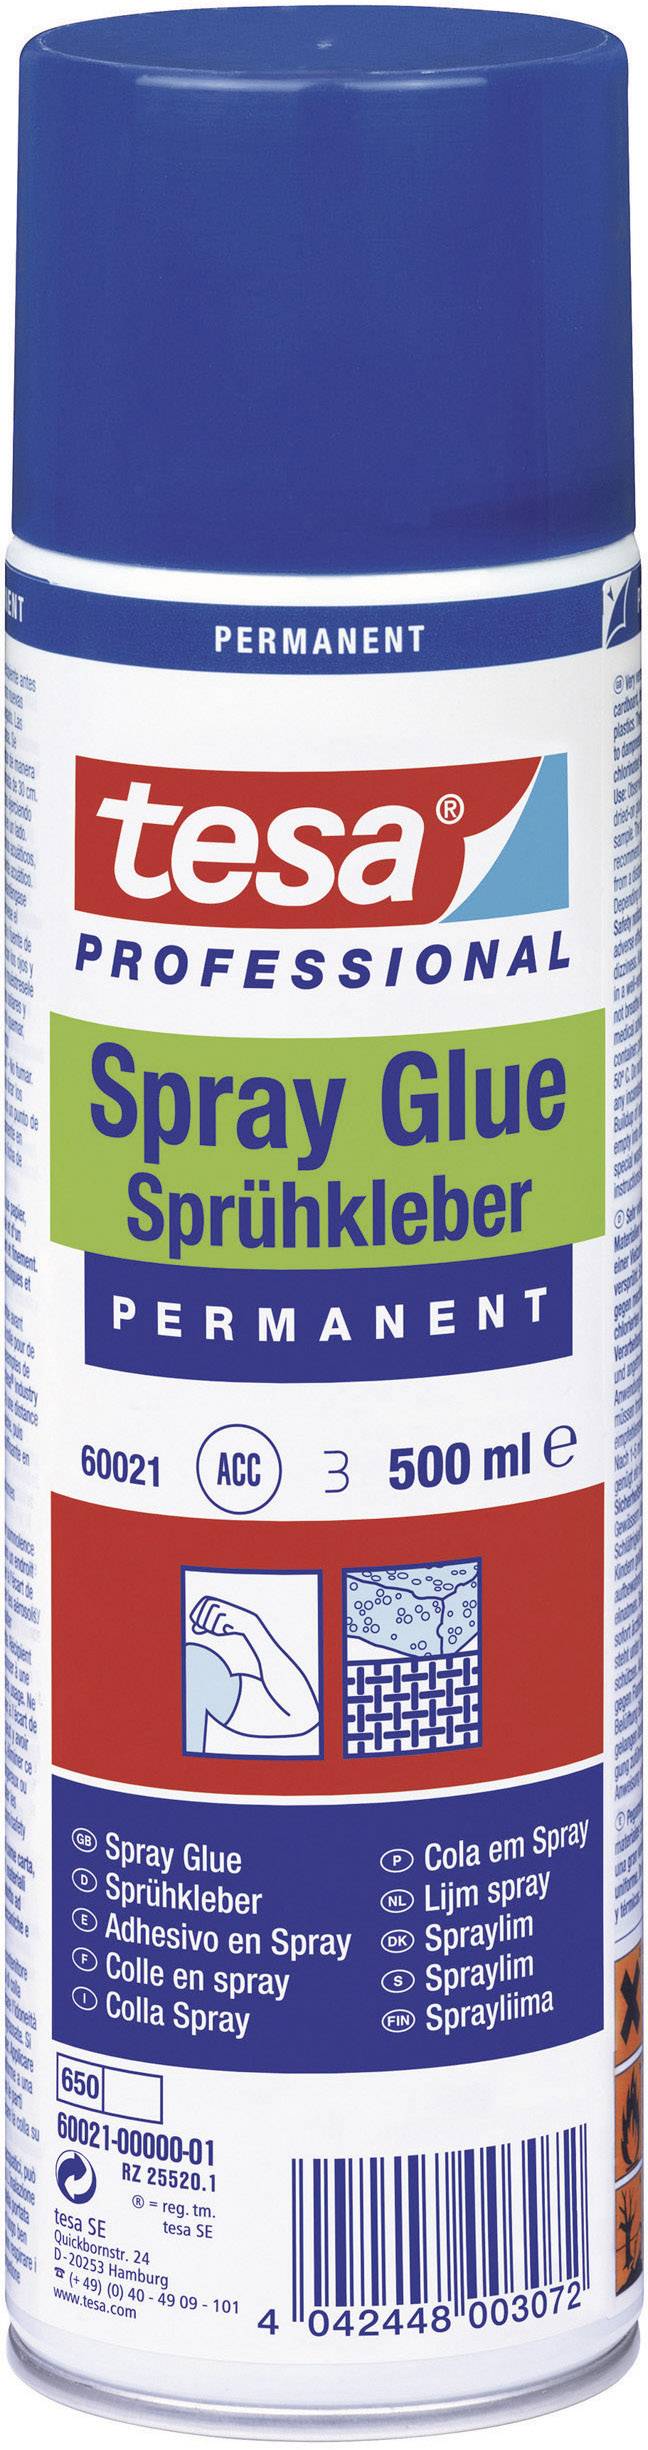 Buy Tesa® Spray Glue Permanent 300 ml